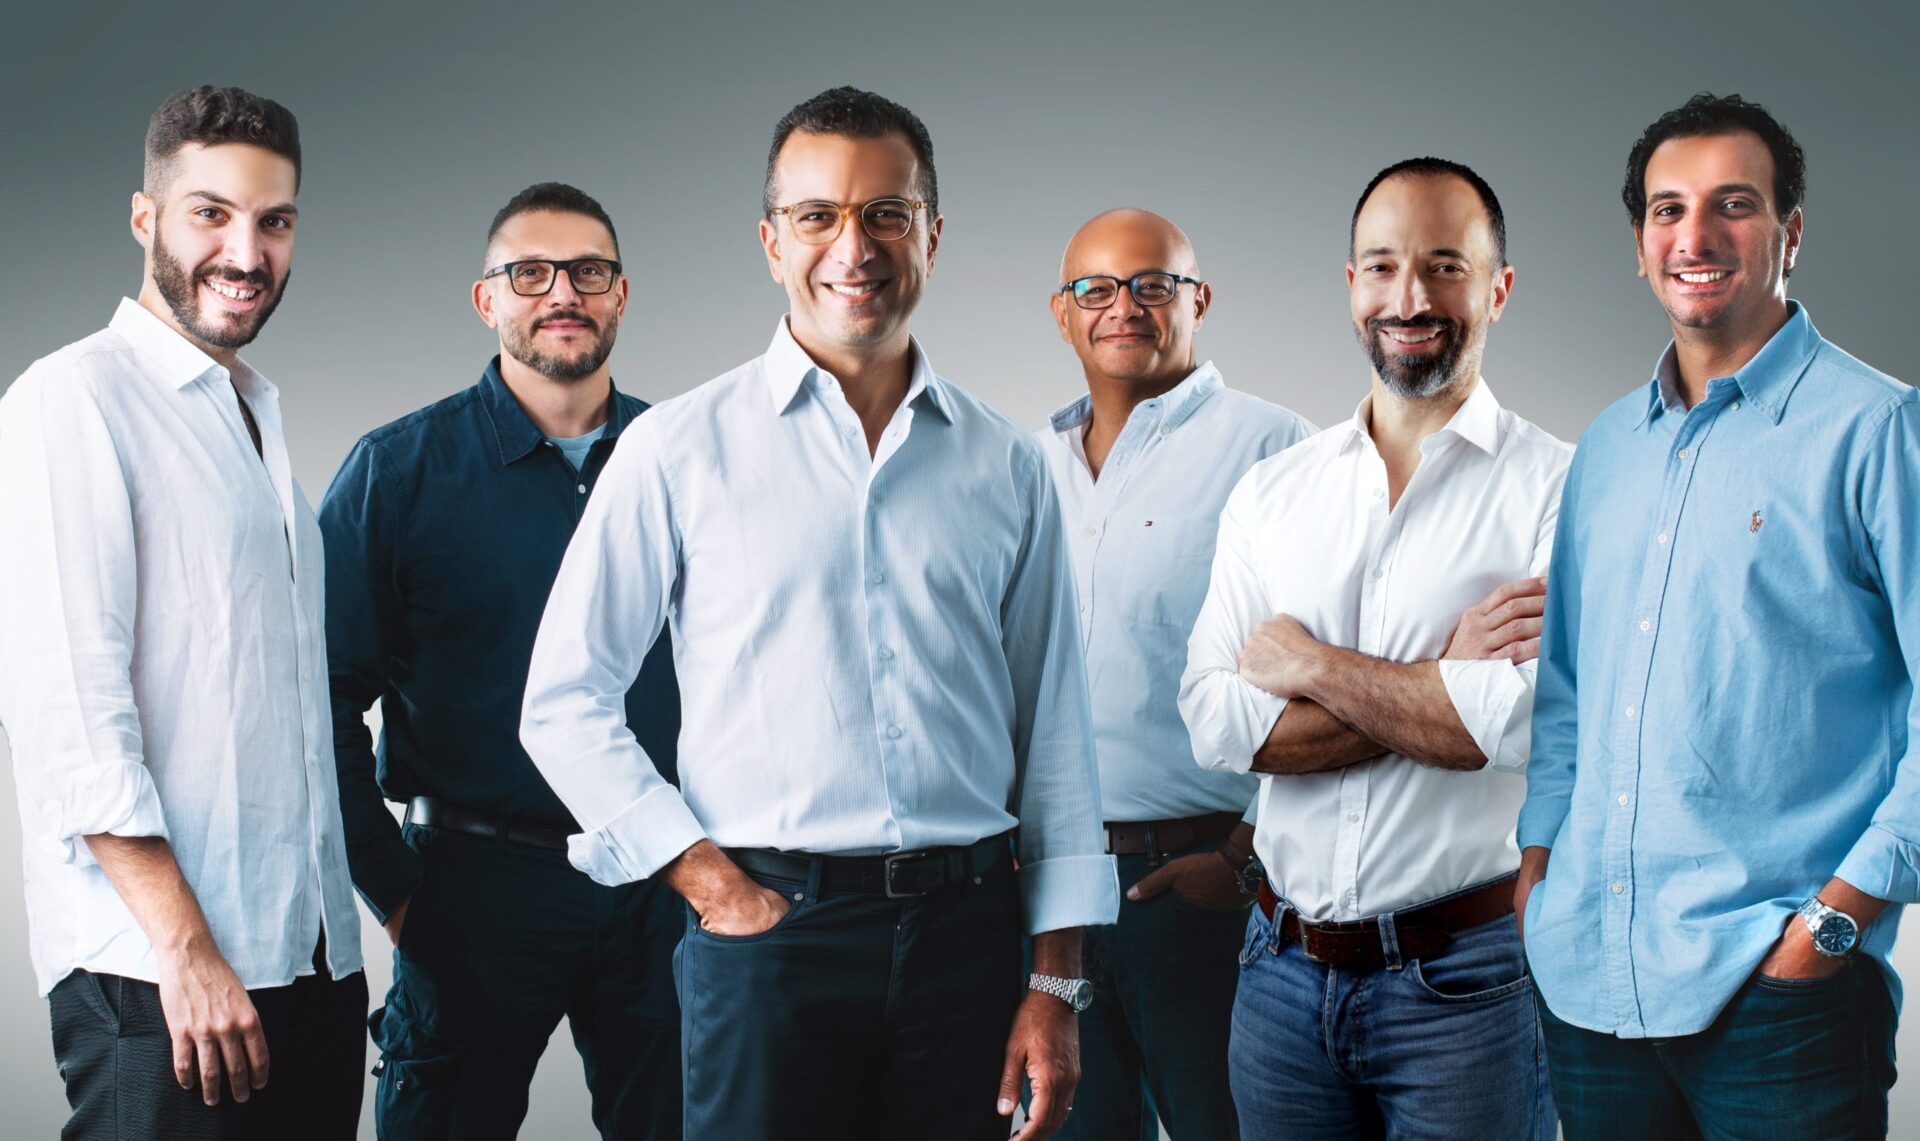 Blnk, Egyptian Startup, Raises Pre-Seed Round Of $32 million